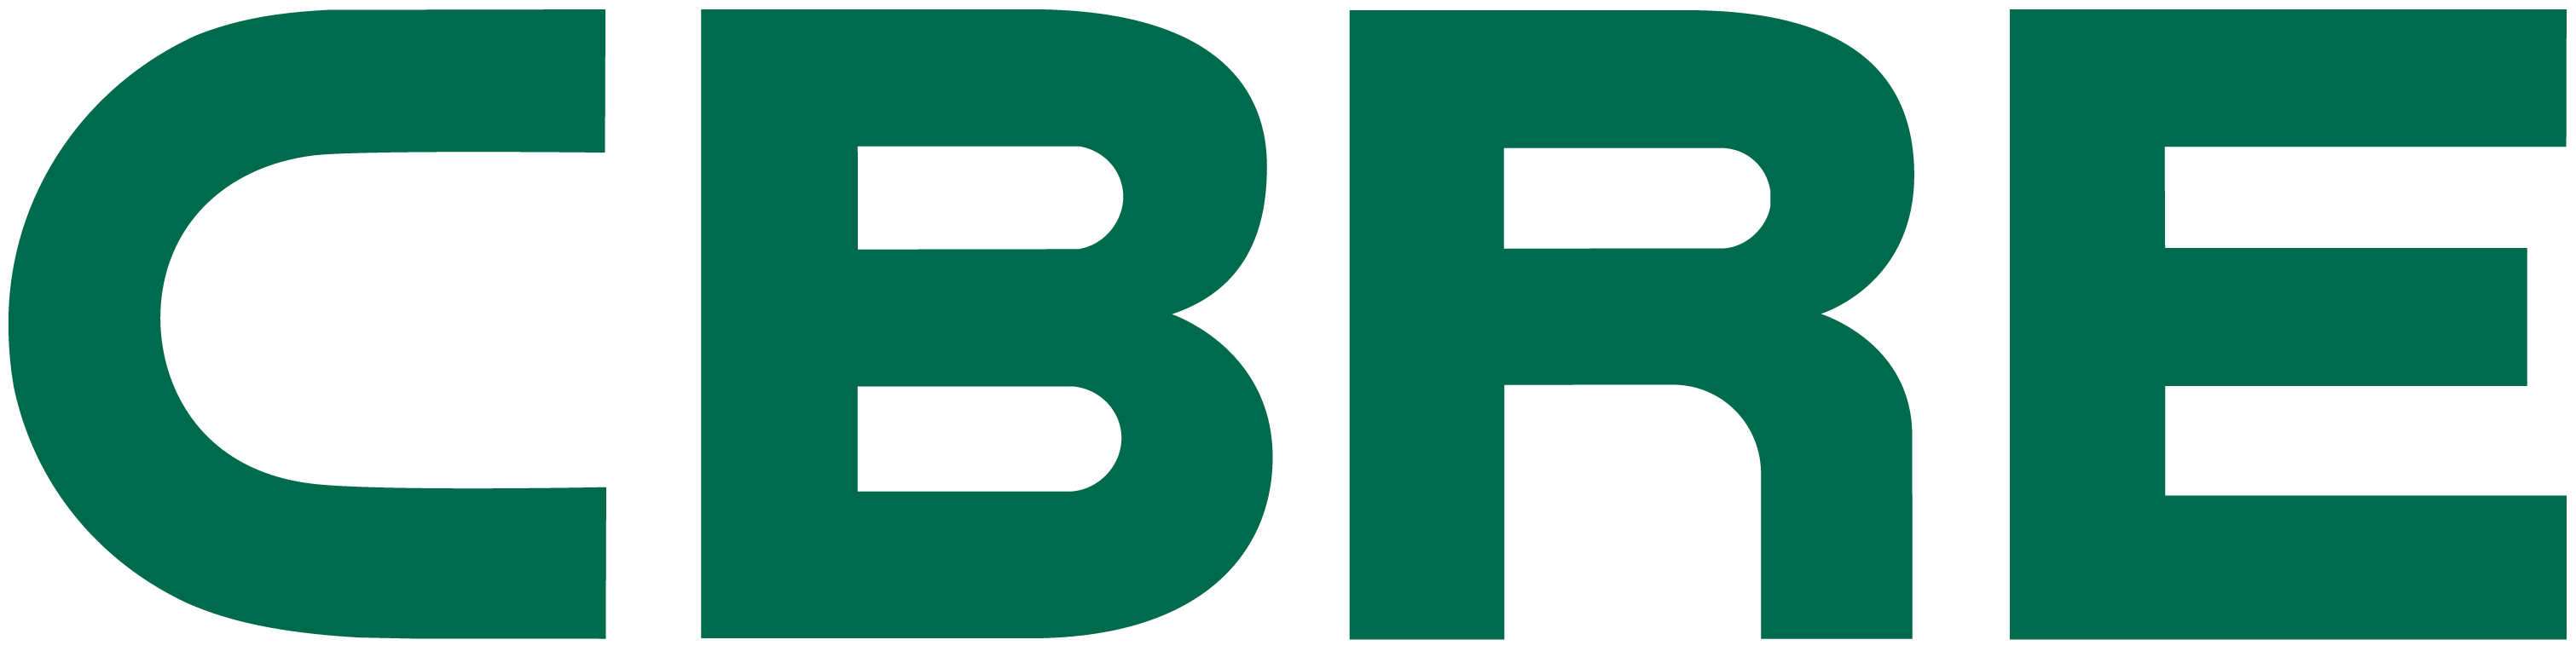 Cbre Pte. Ltd. logo